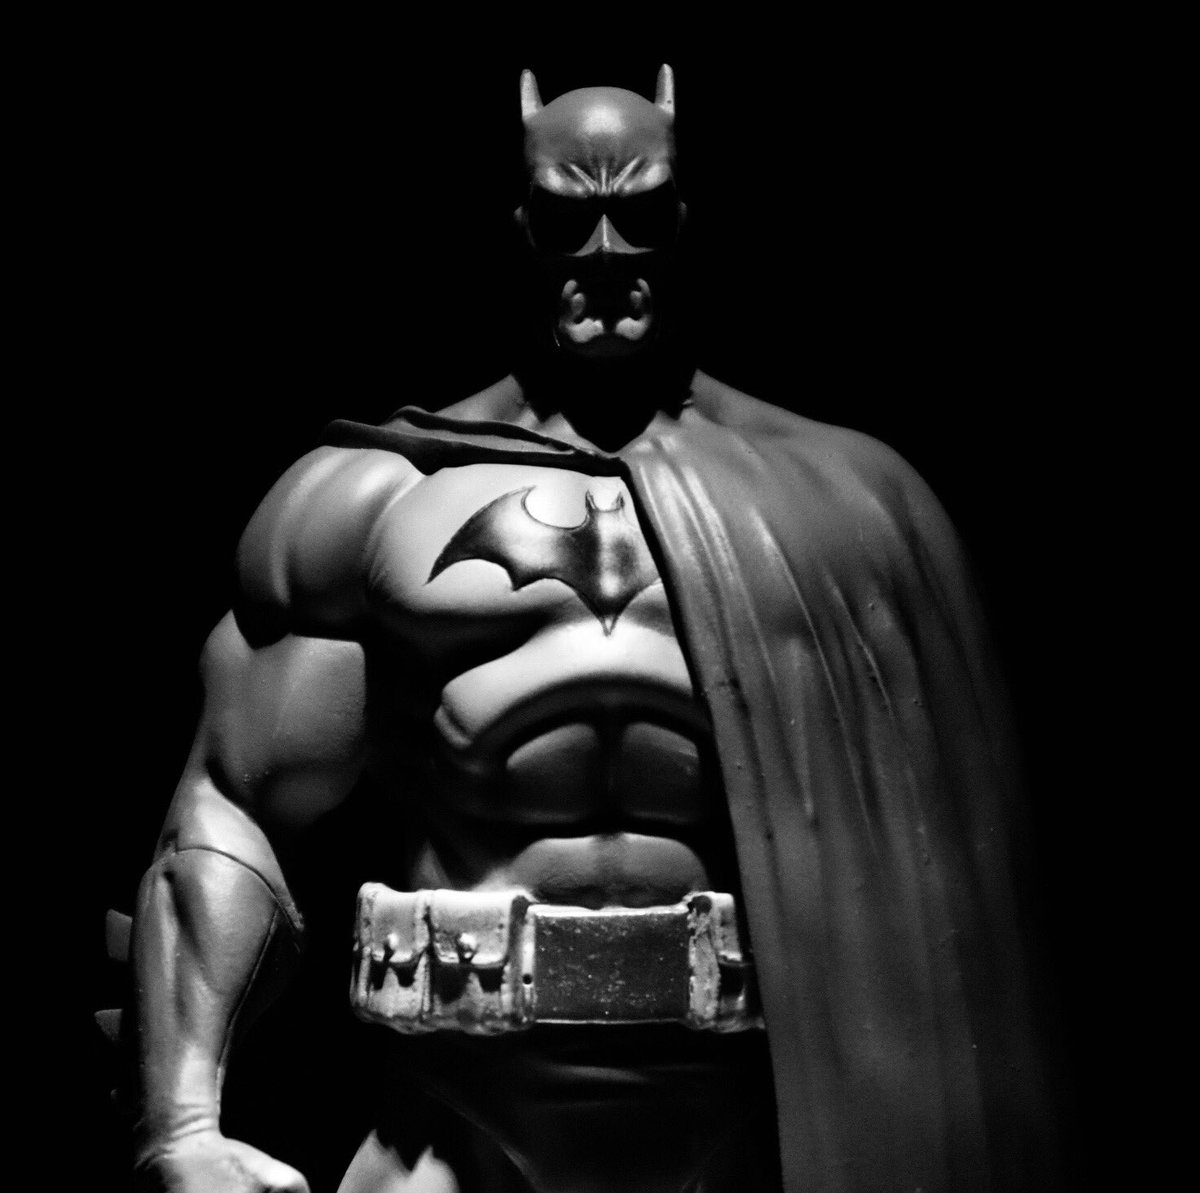 Tomoy Batmanｵﾀｸのwebｸﾘｴｲﾀｰ かっこいい バットマン は全体はっきり見えてるより こうやって暗く影かかってる方がかっこいいですね